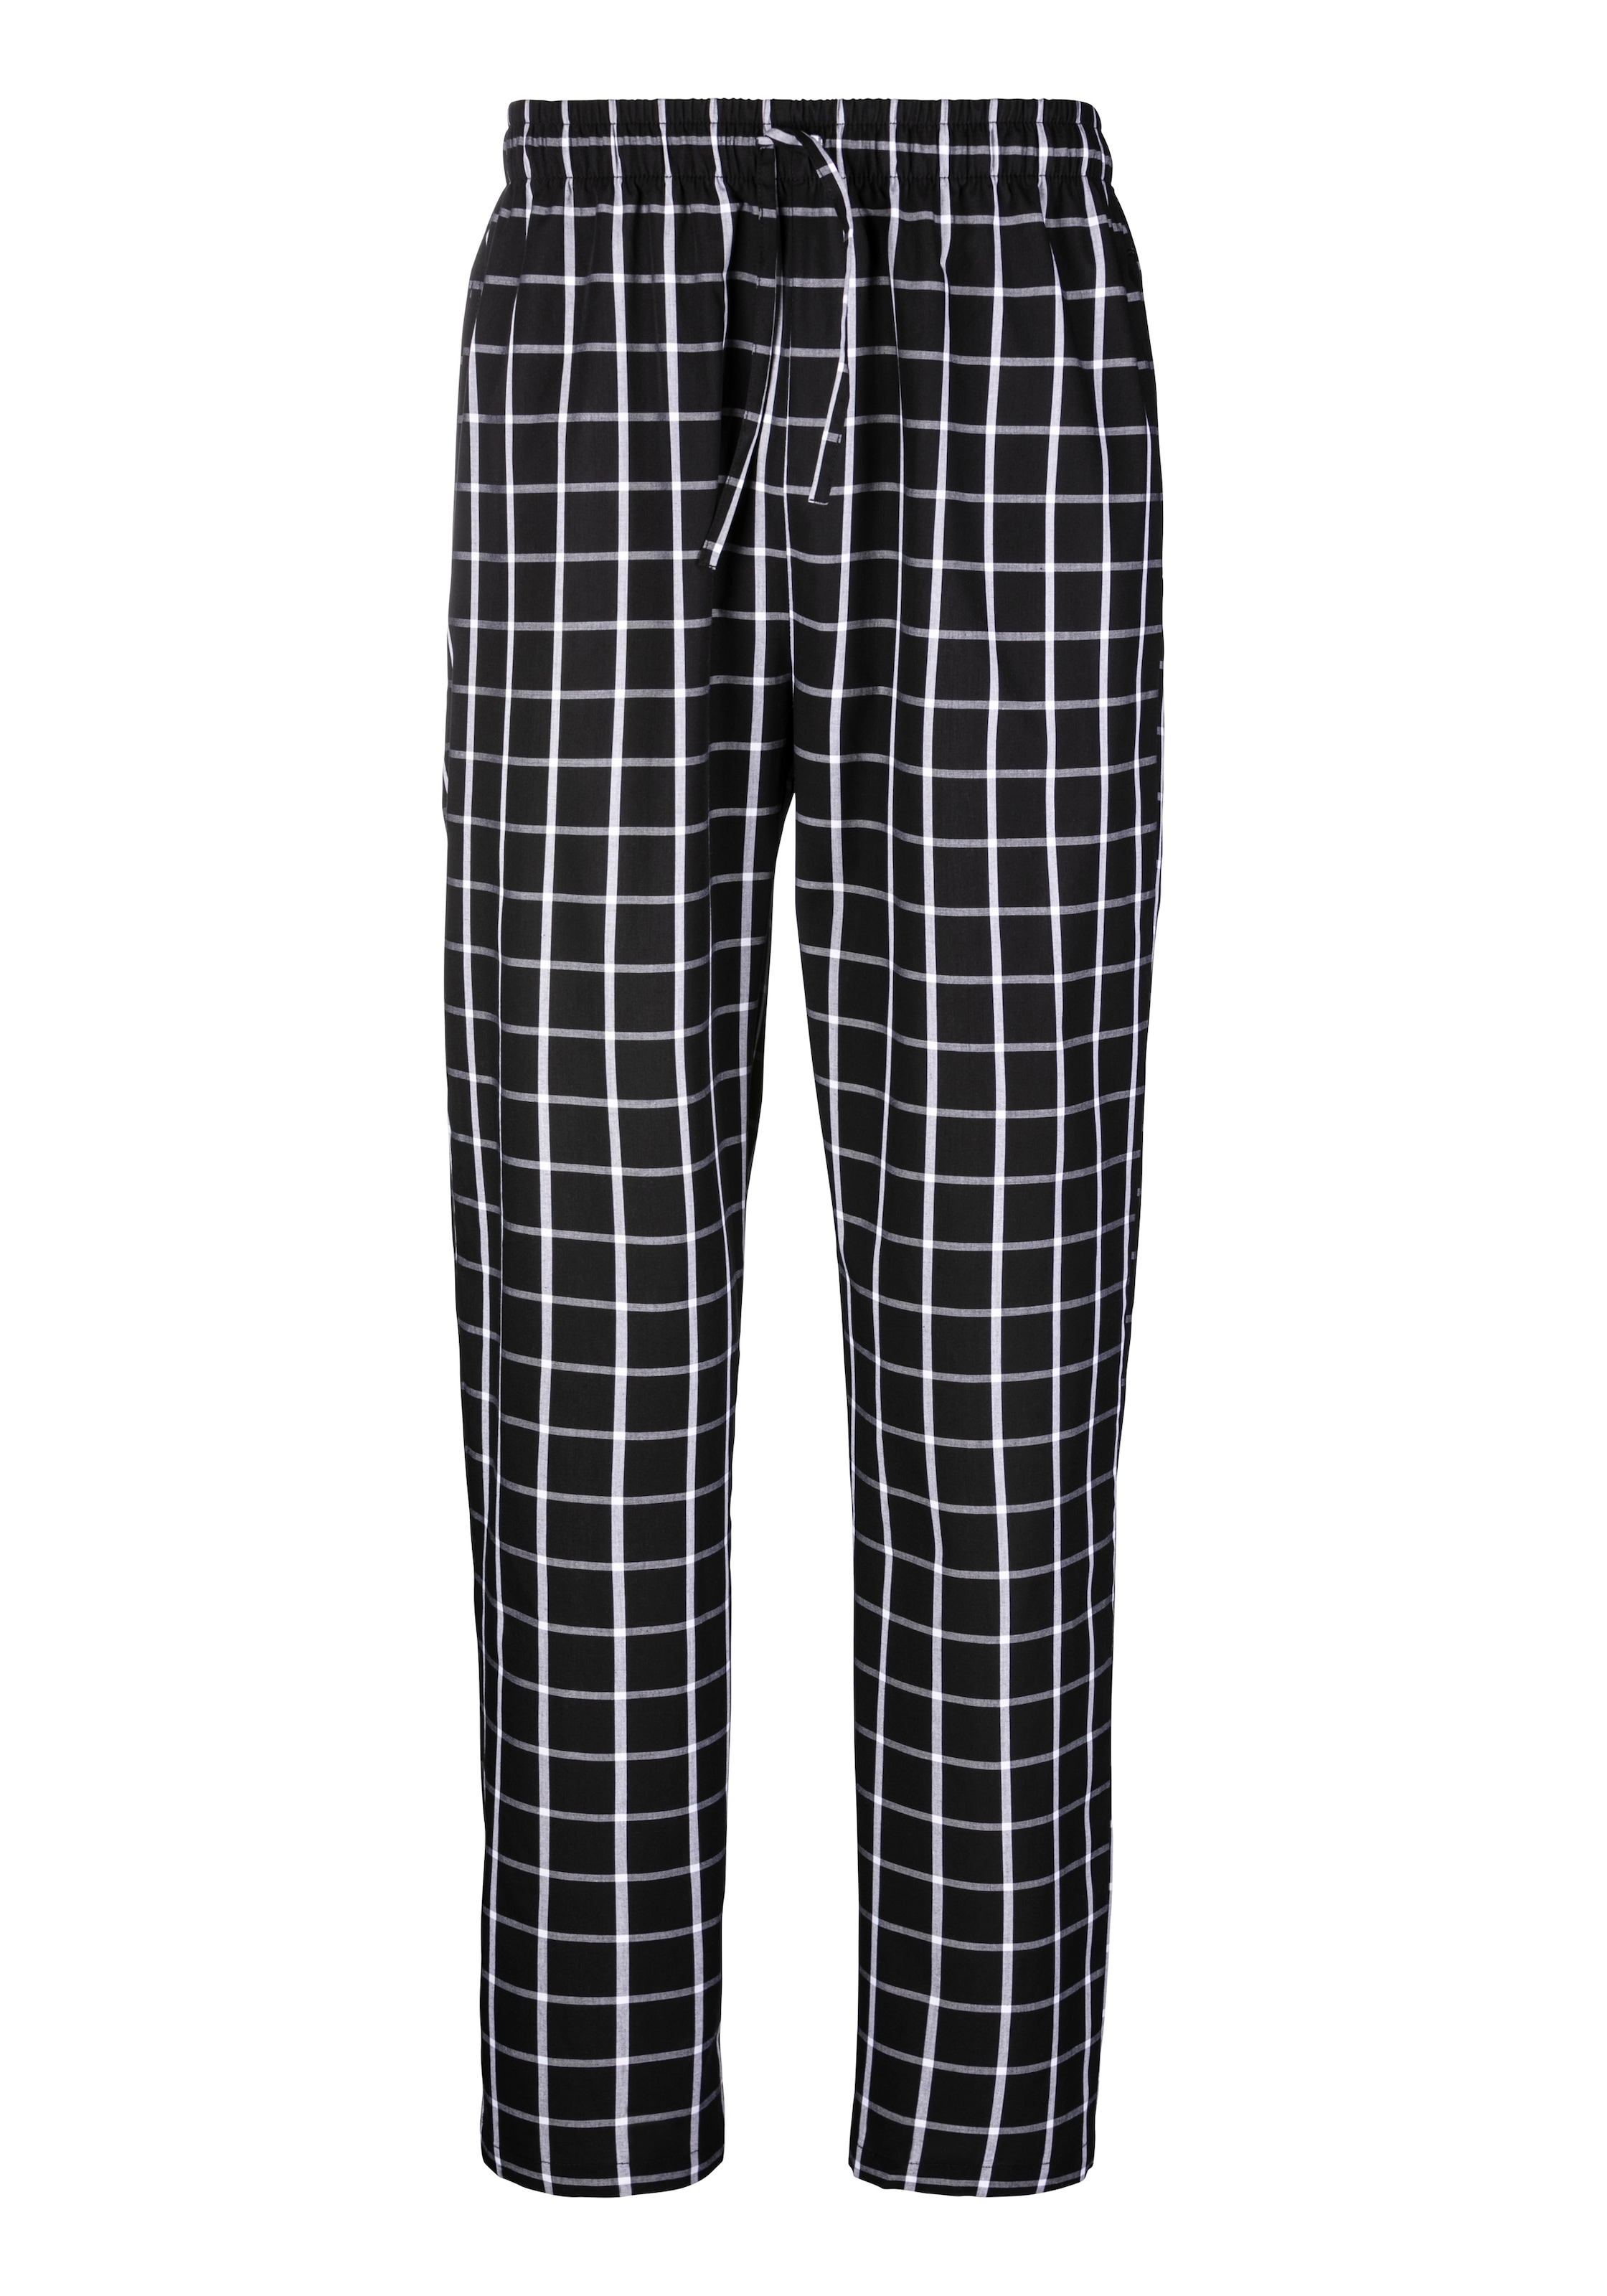 AUTHENTIC LE JOGGER tlg., kaufen Webhose (2 Stück), mit karierter 1 BAUR | Pyjama